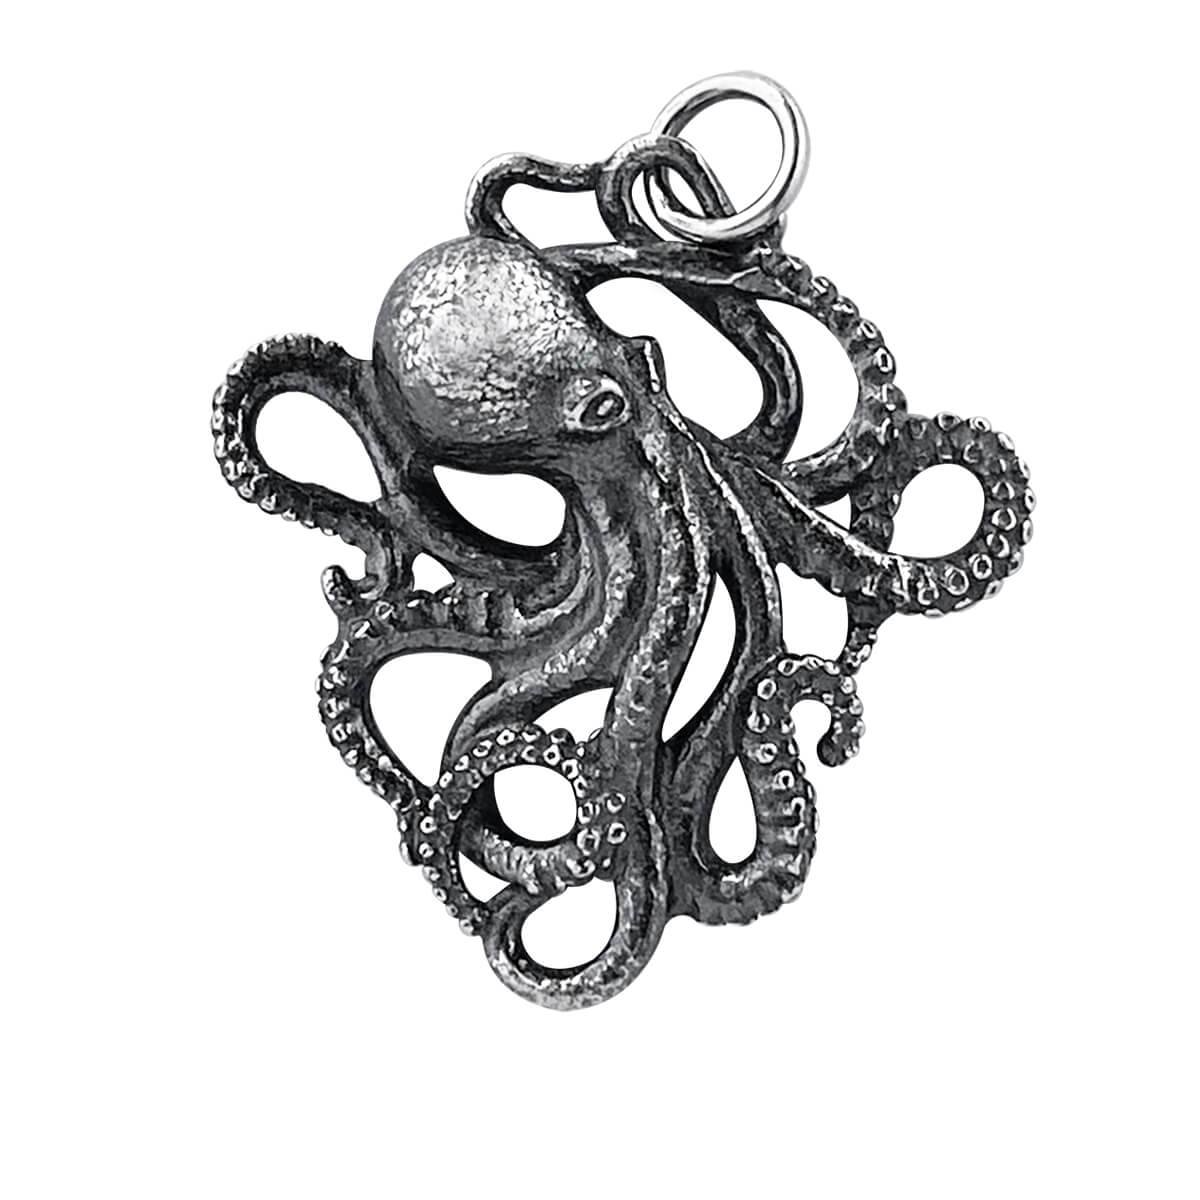 Octopus pendant sterling silver mollusc